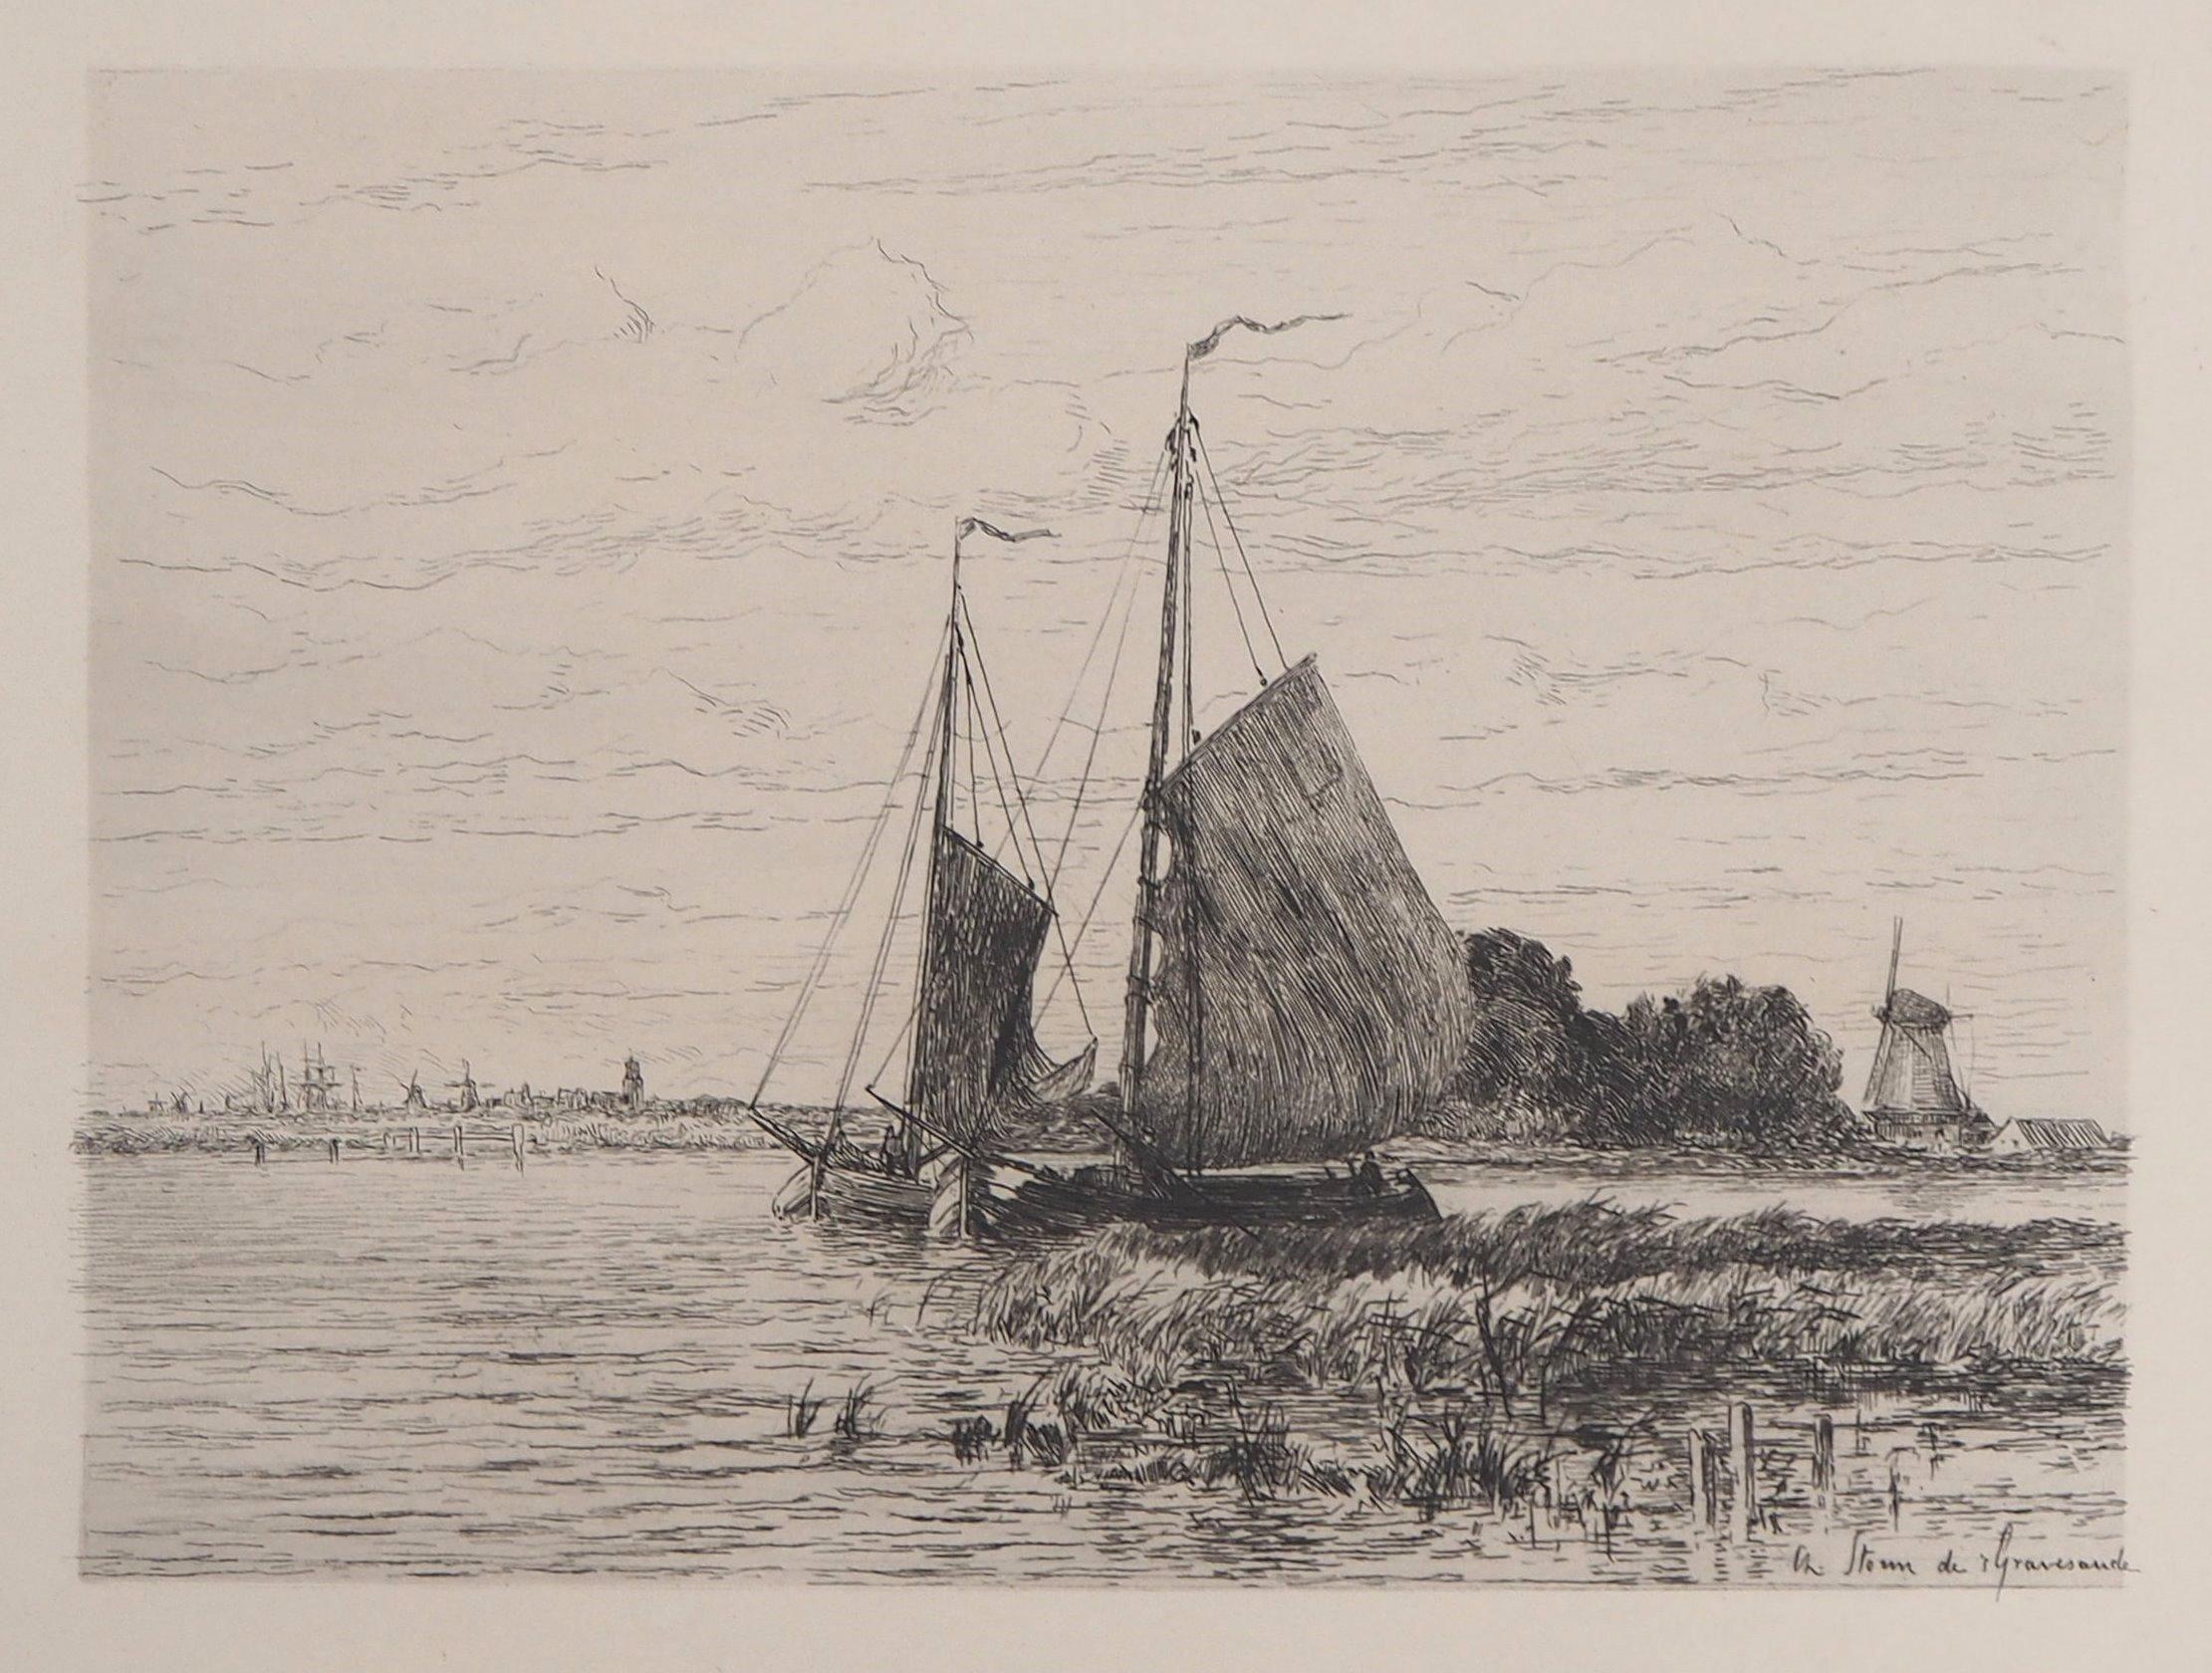 Carel Nicolaas STORM VAN'S GRAVENSANDE Landscape Print - Fisherman Boats on the Scheldt - Original Etching